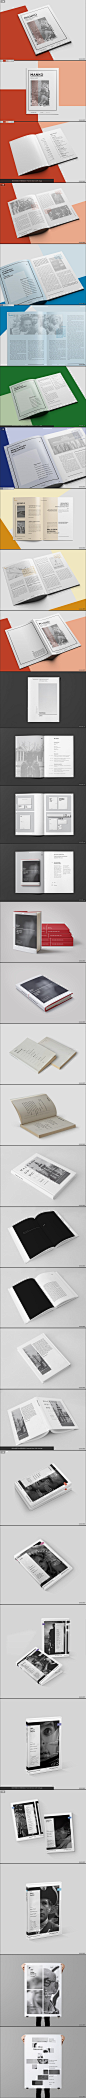 BIZON的黑与白书籍排版设计-Przemek Bizoń [32P]-平面设计